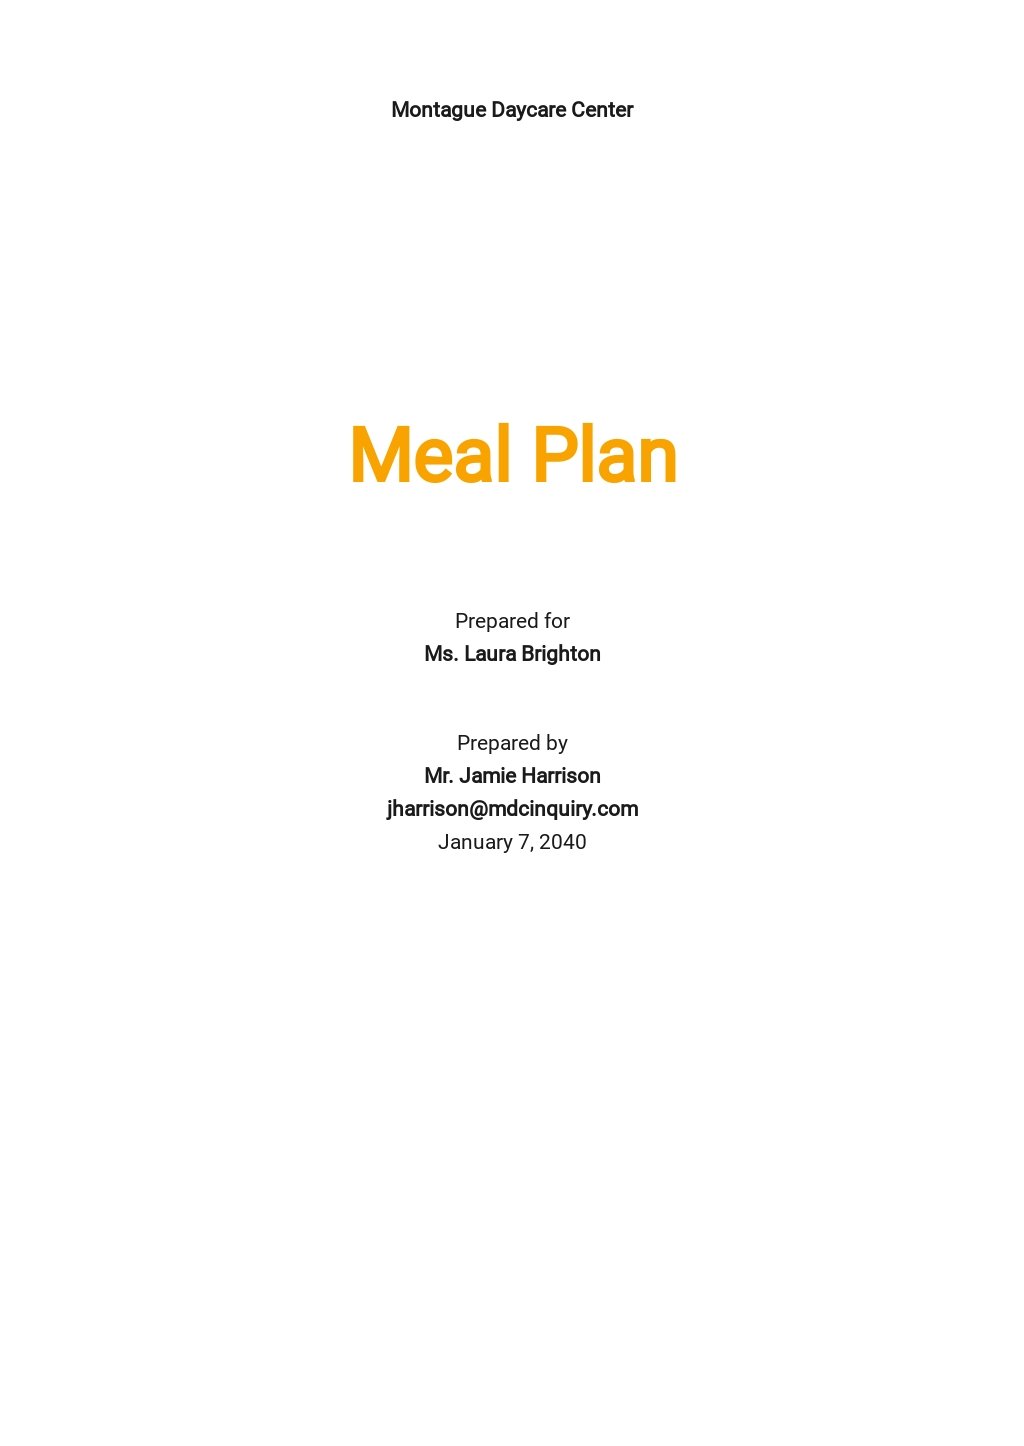 Meal Plan Template Editable images go banana com